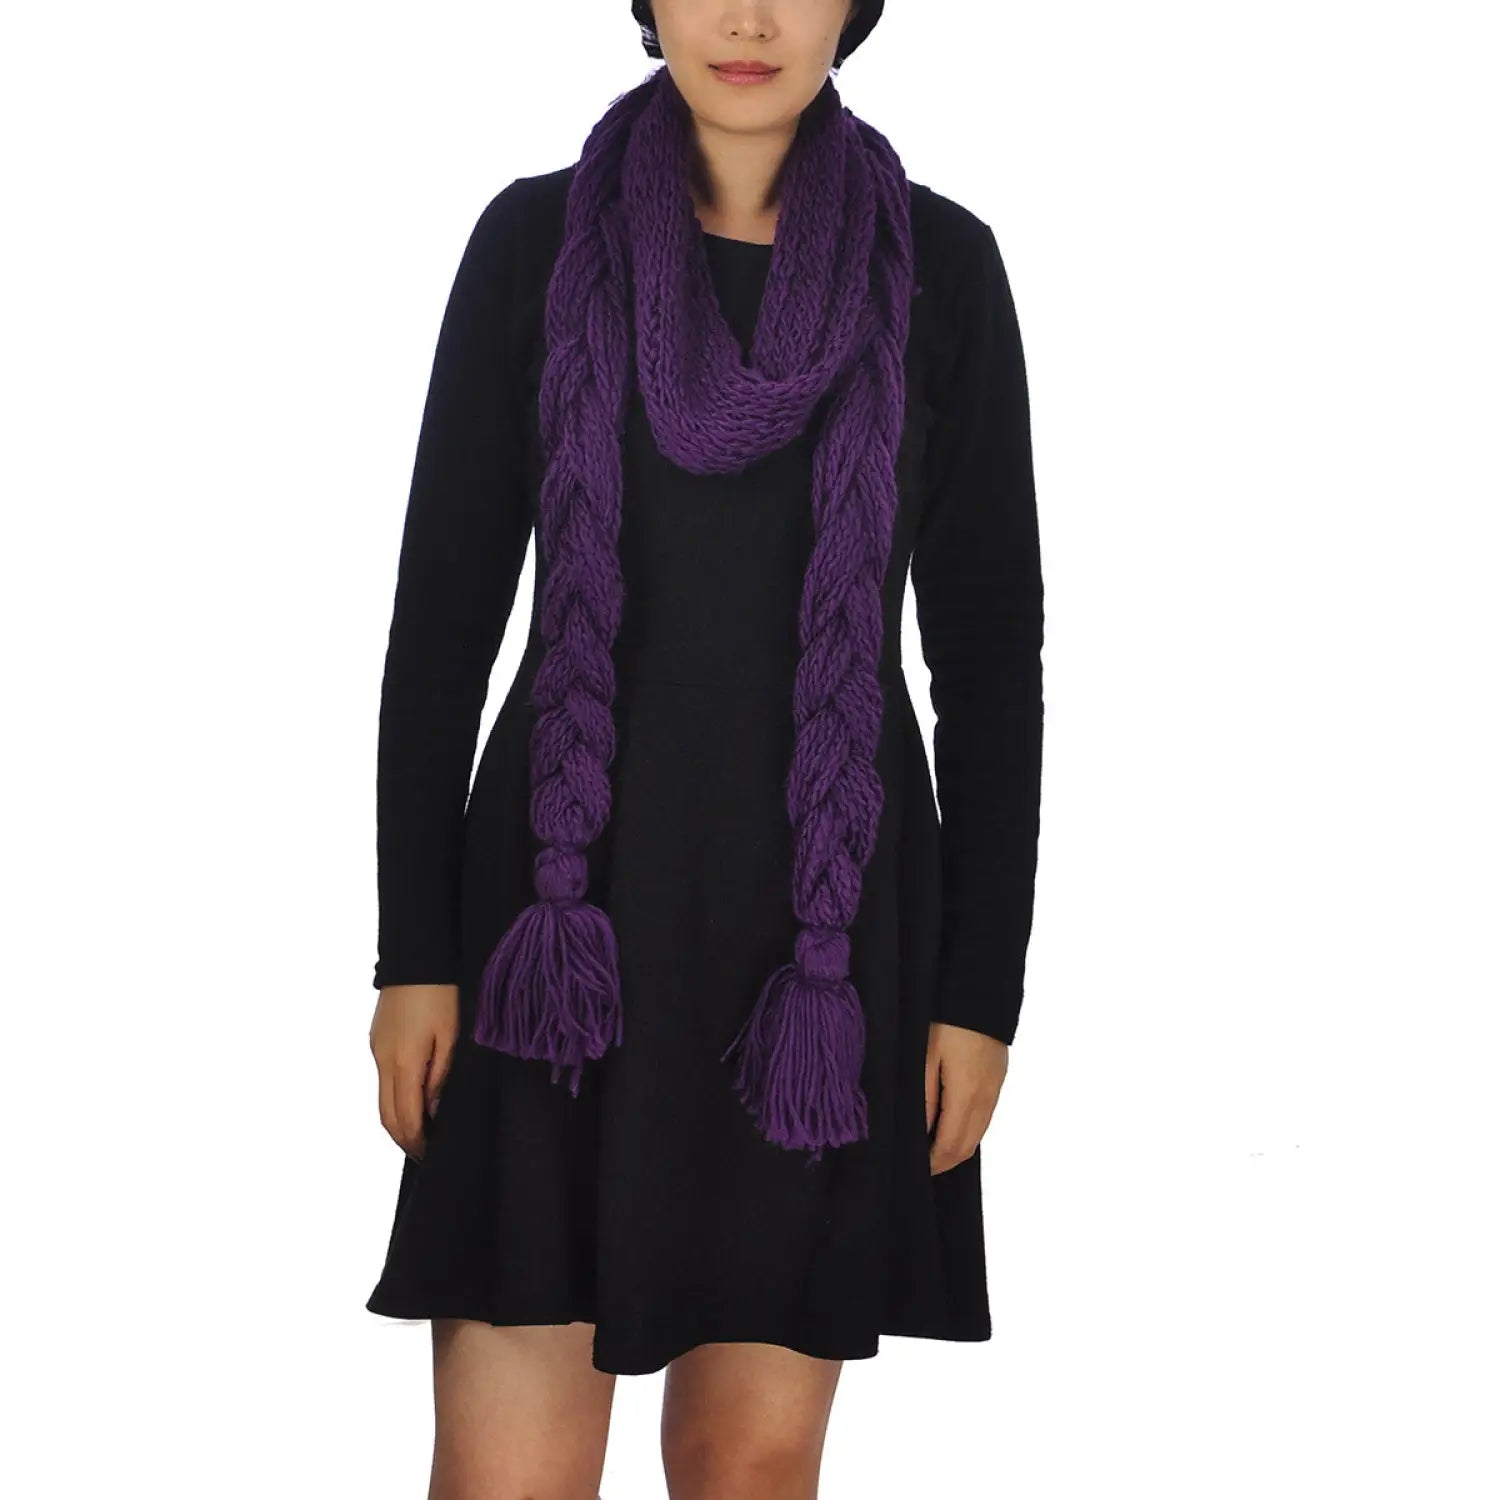 Woman wearing oversized long plait knitted scarf in purple